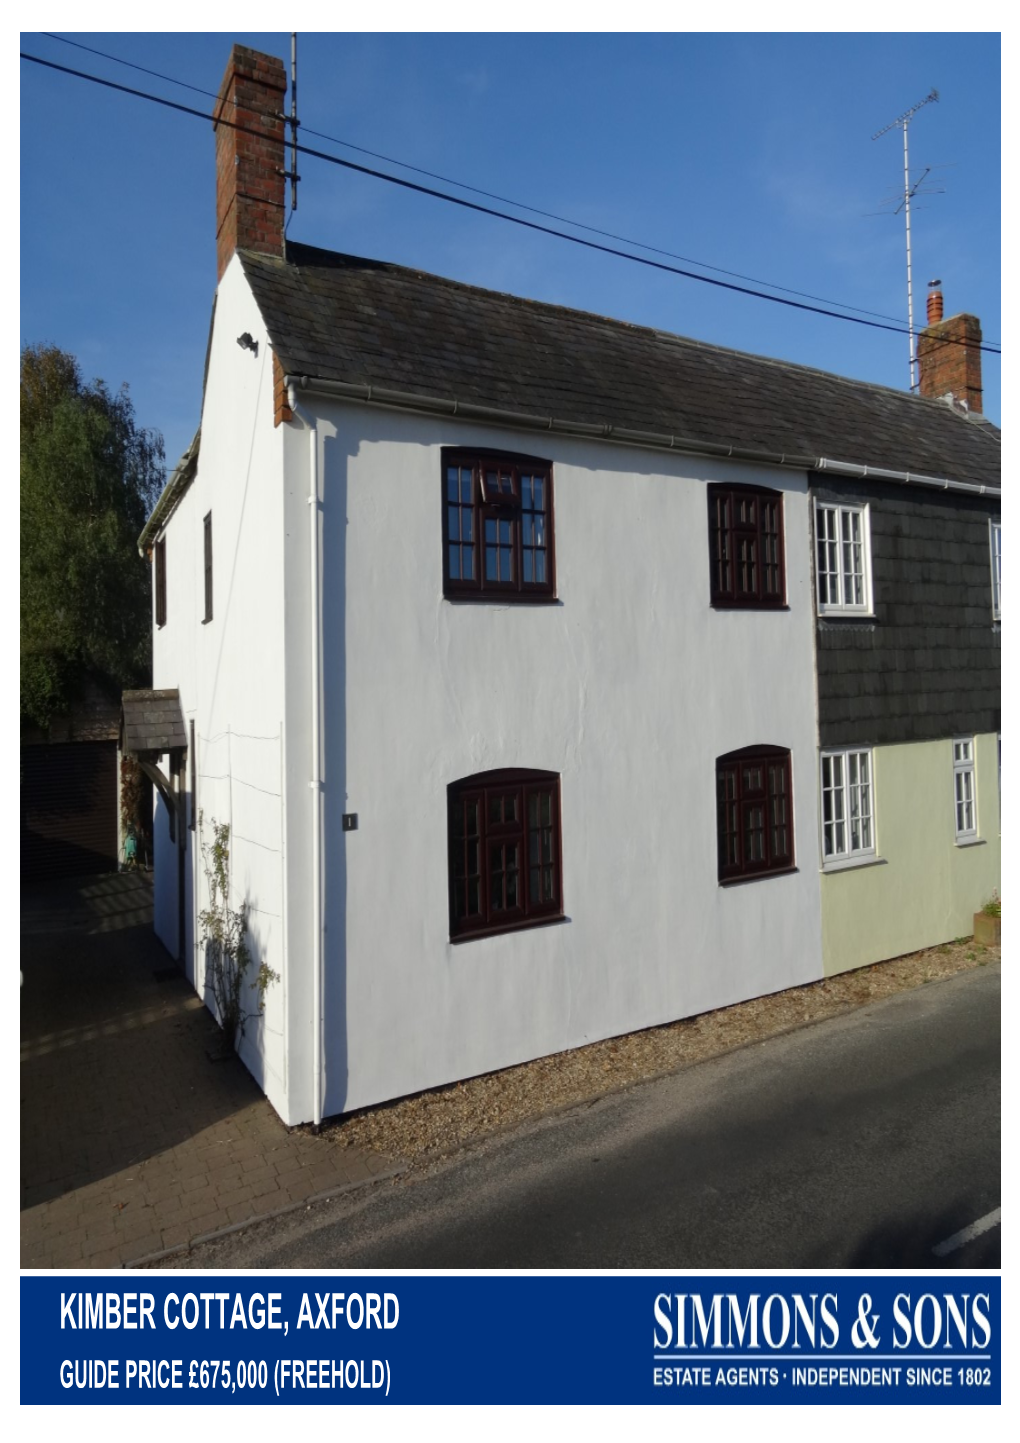 KIMBER COTTAGE, AXFORD GUIDE PRICE £675,000 (FREEHOLD) 1 Kimber Cottage, Axford, Basingstoke, Hampshire RG25 2ED